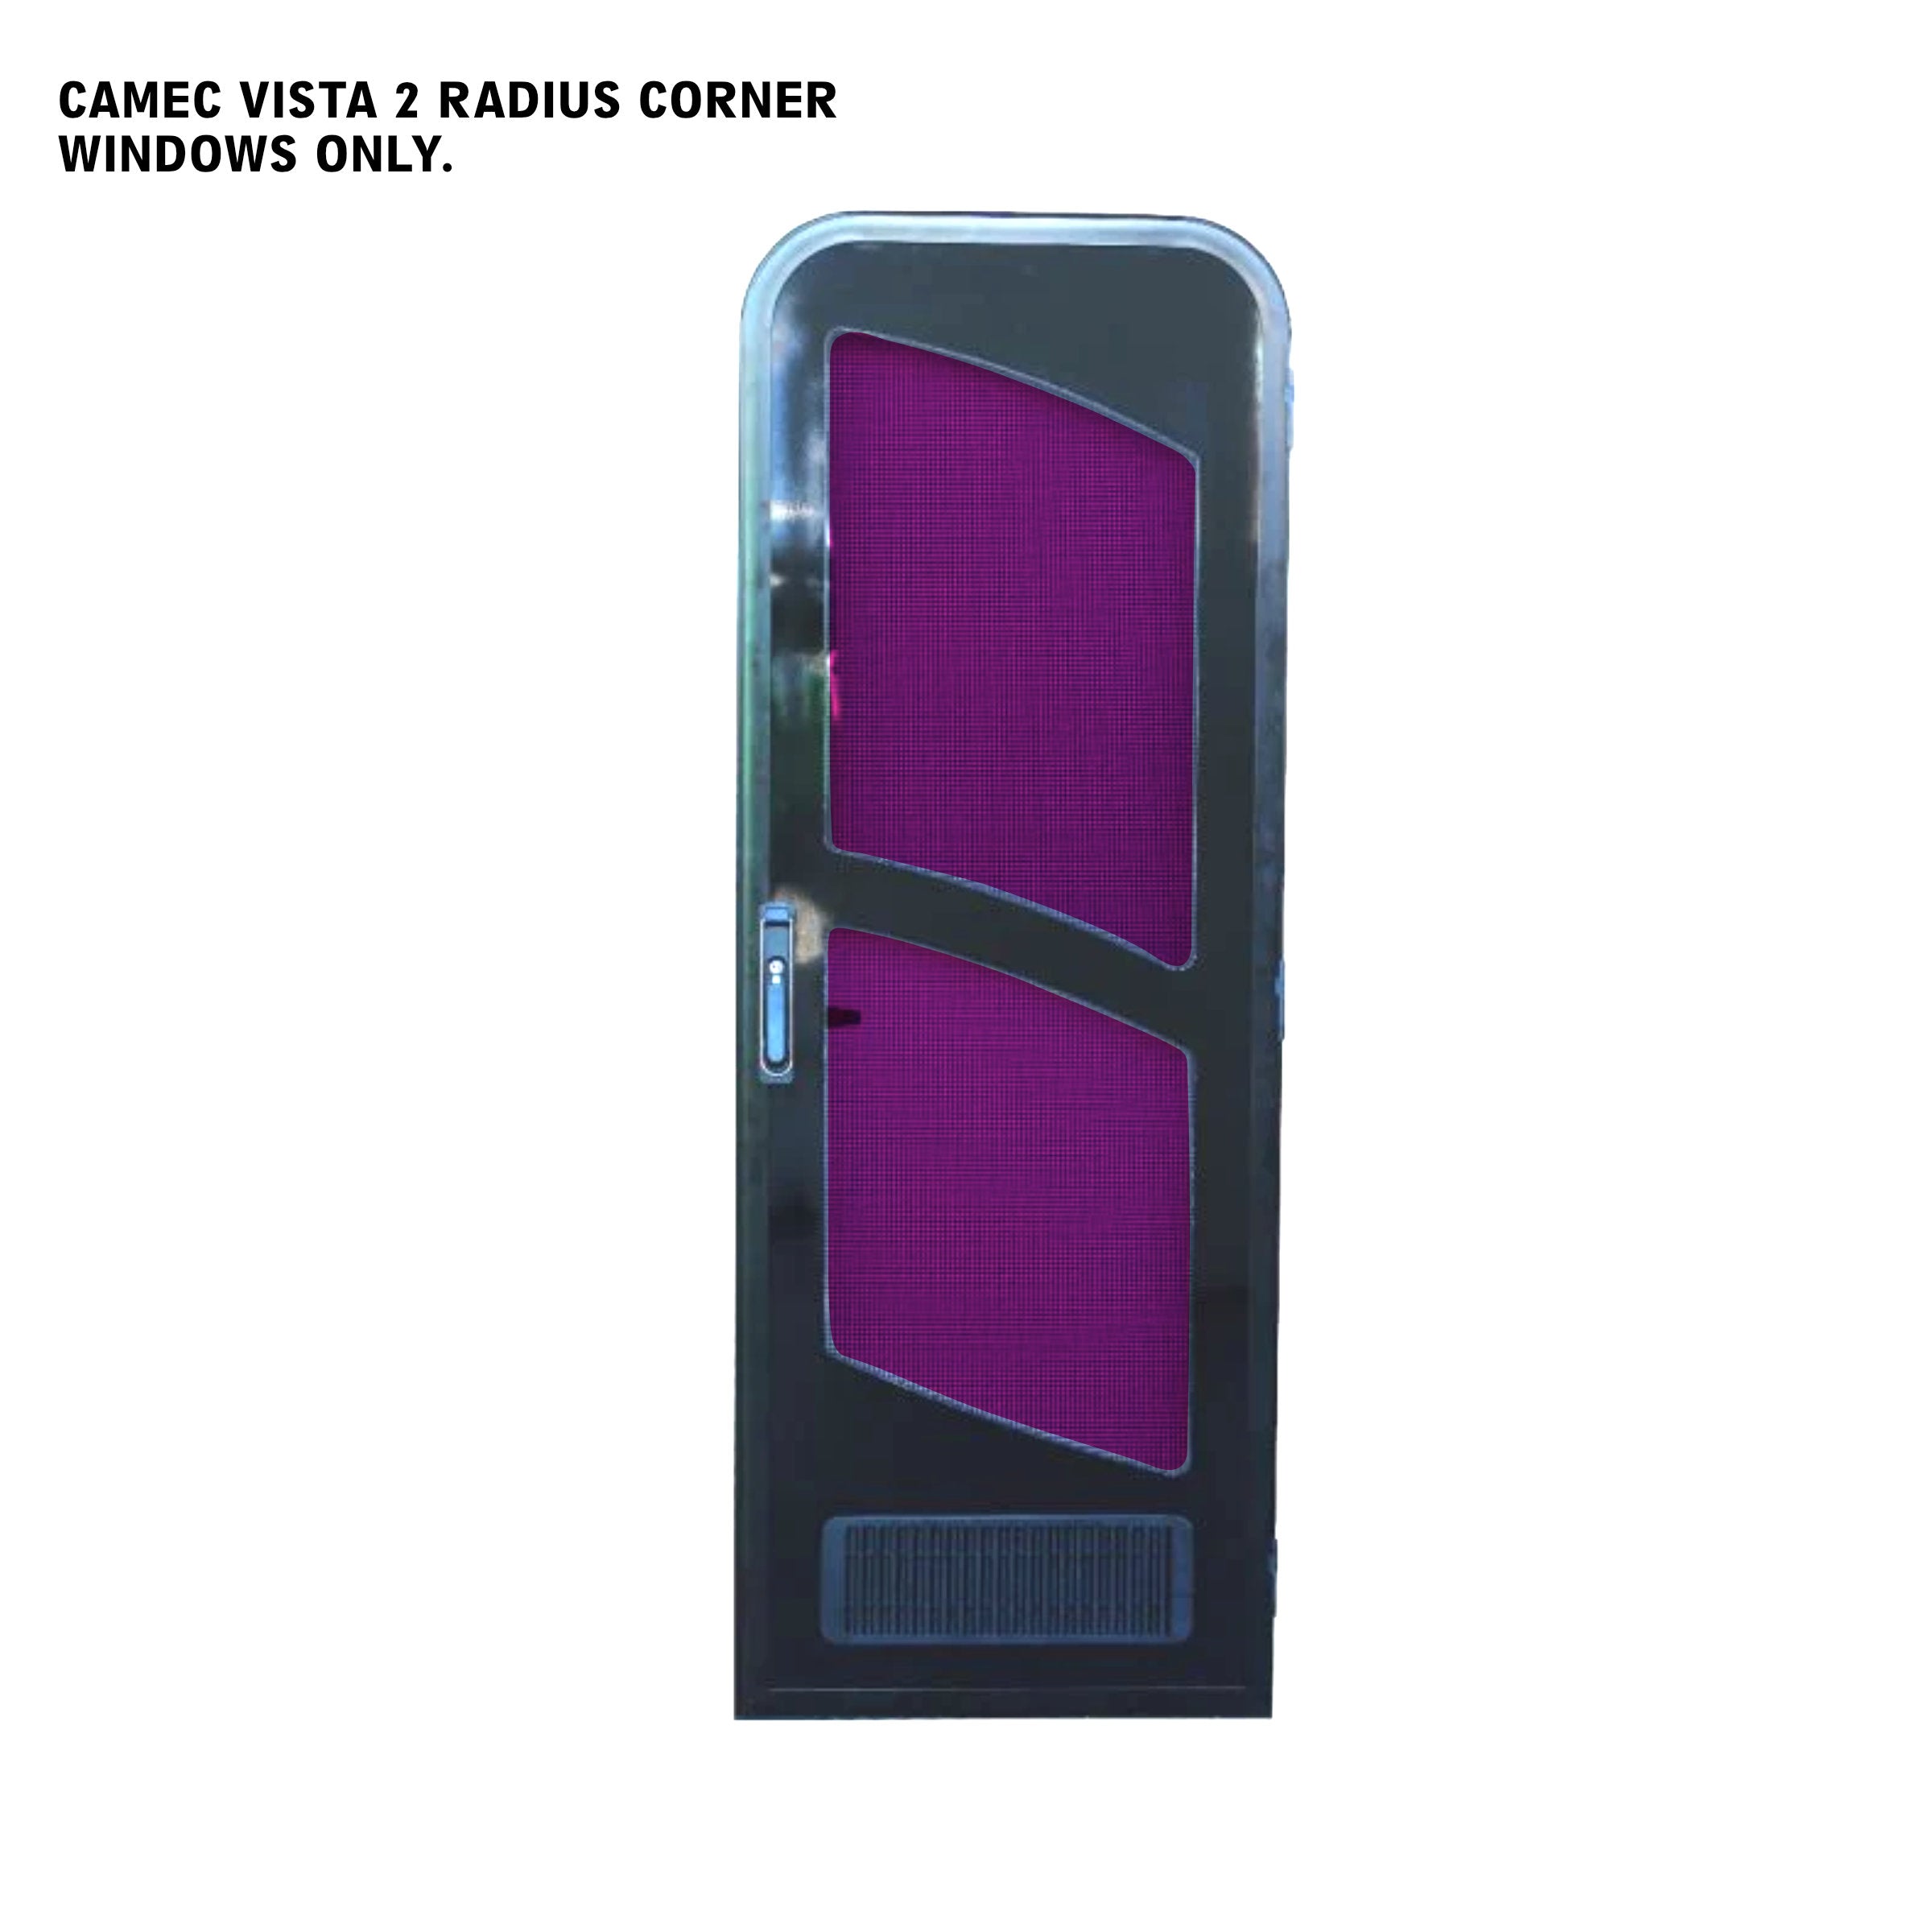 BushWrapz Kit - To suit Camec Vista 2 Radius Corners